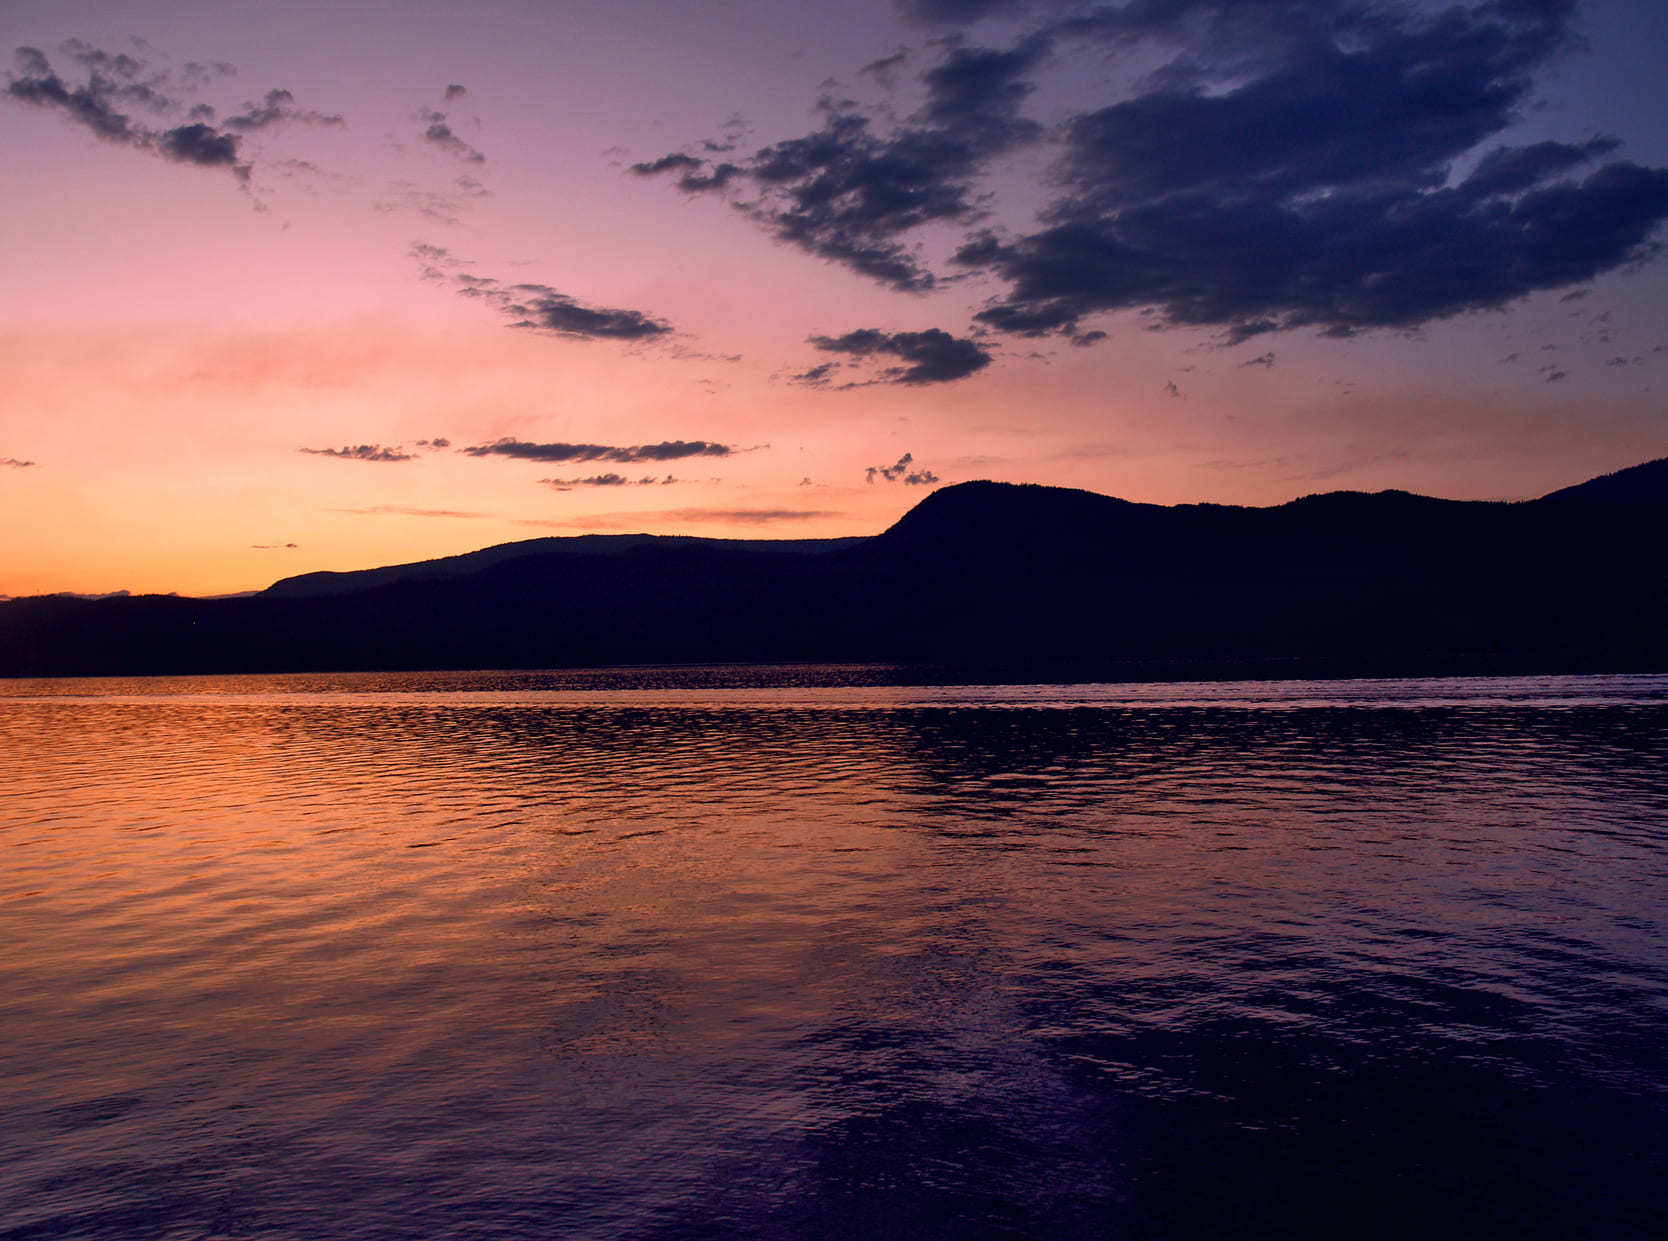 Sunset over Shuswap Lake in Eagle Bay, British Columbia